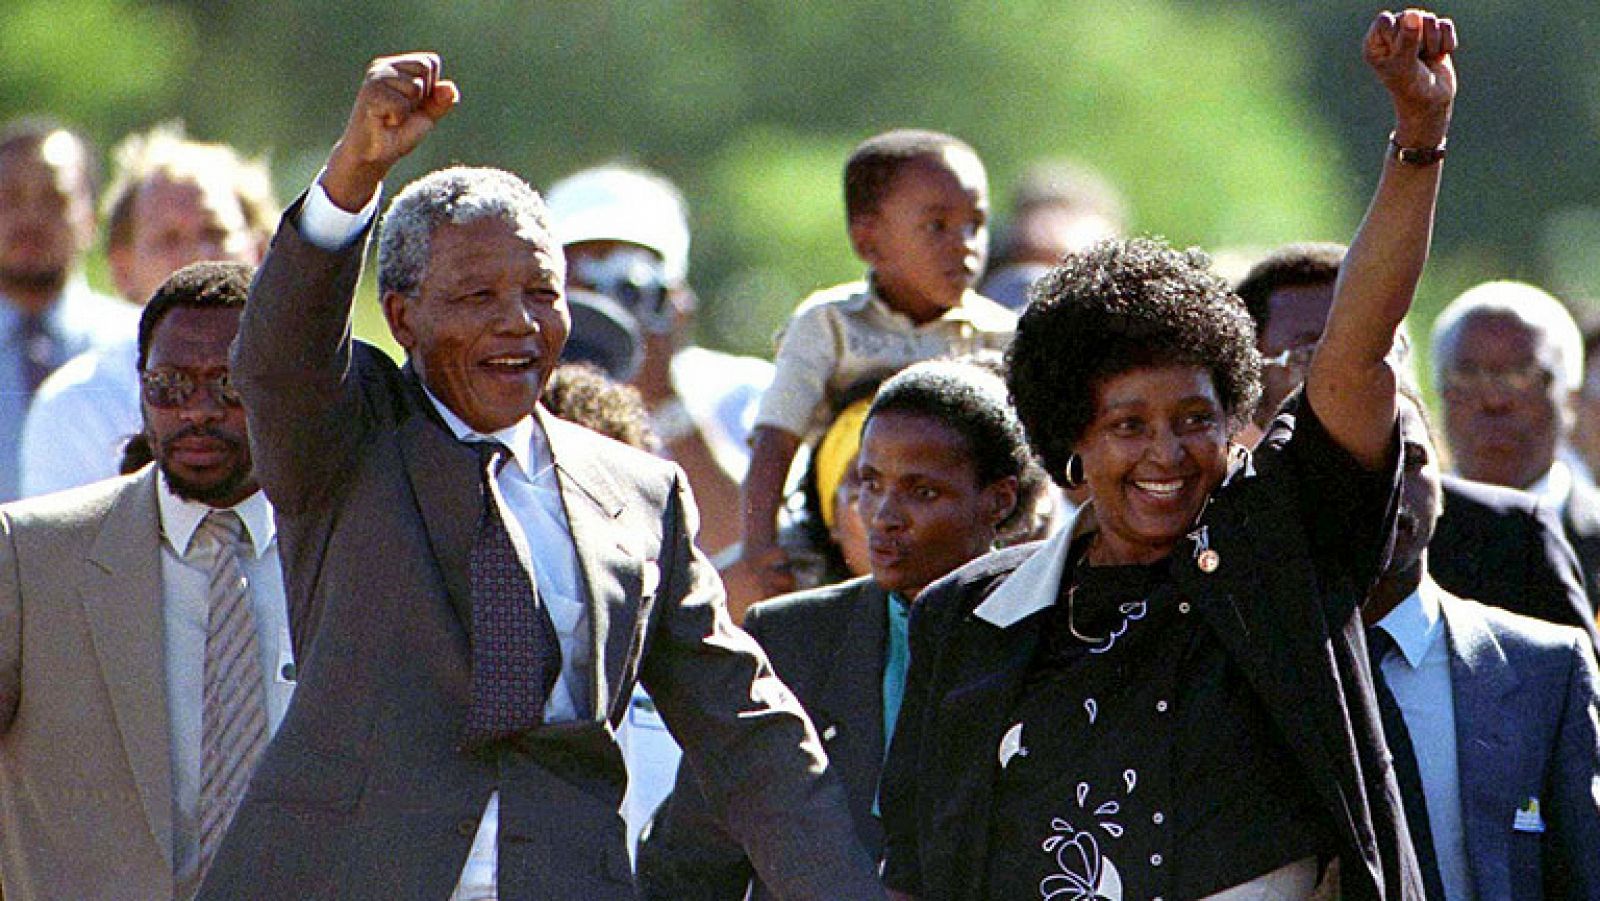 Telediario 1: Mandela, una vida servicio de la lucha por la libertad | RTVE Play